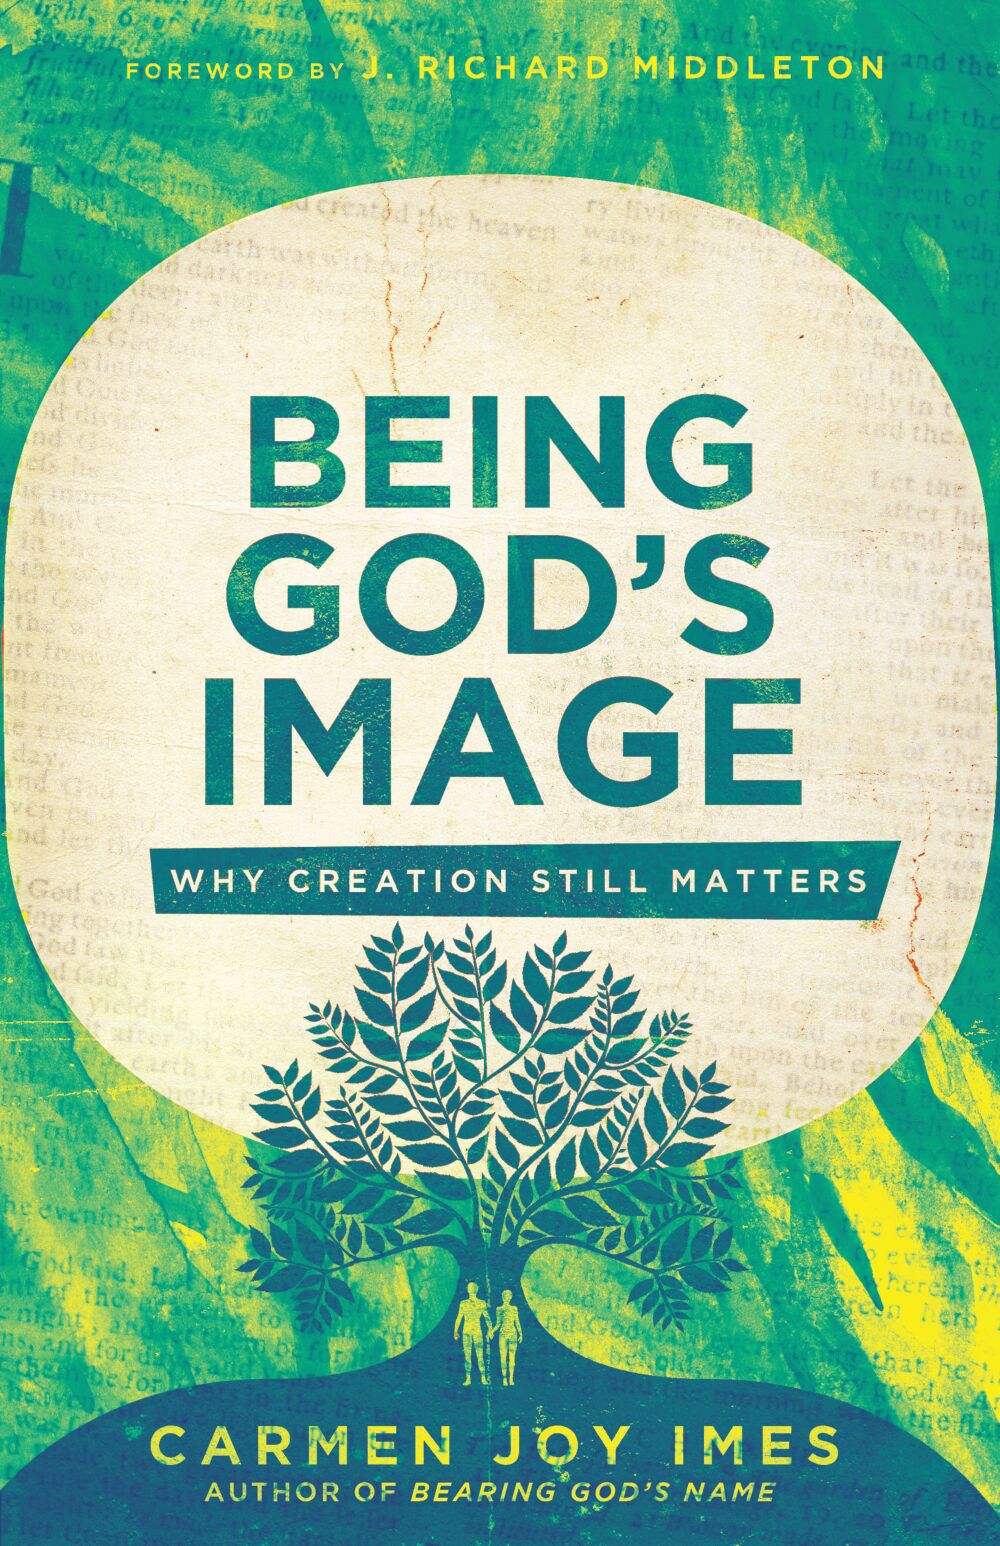 Being God's Image by Carmen Joy Imes